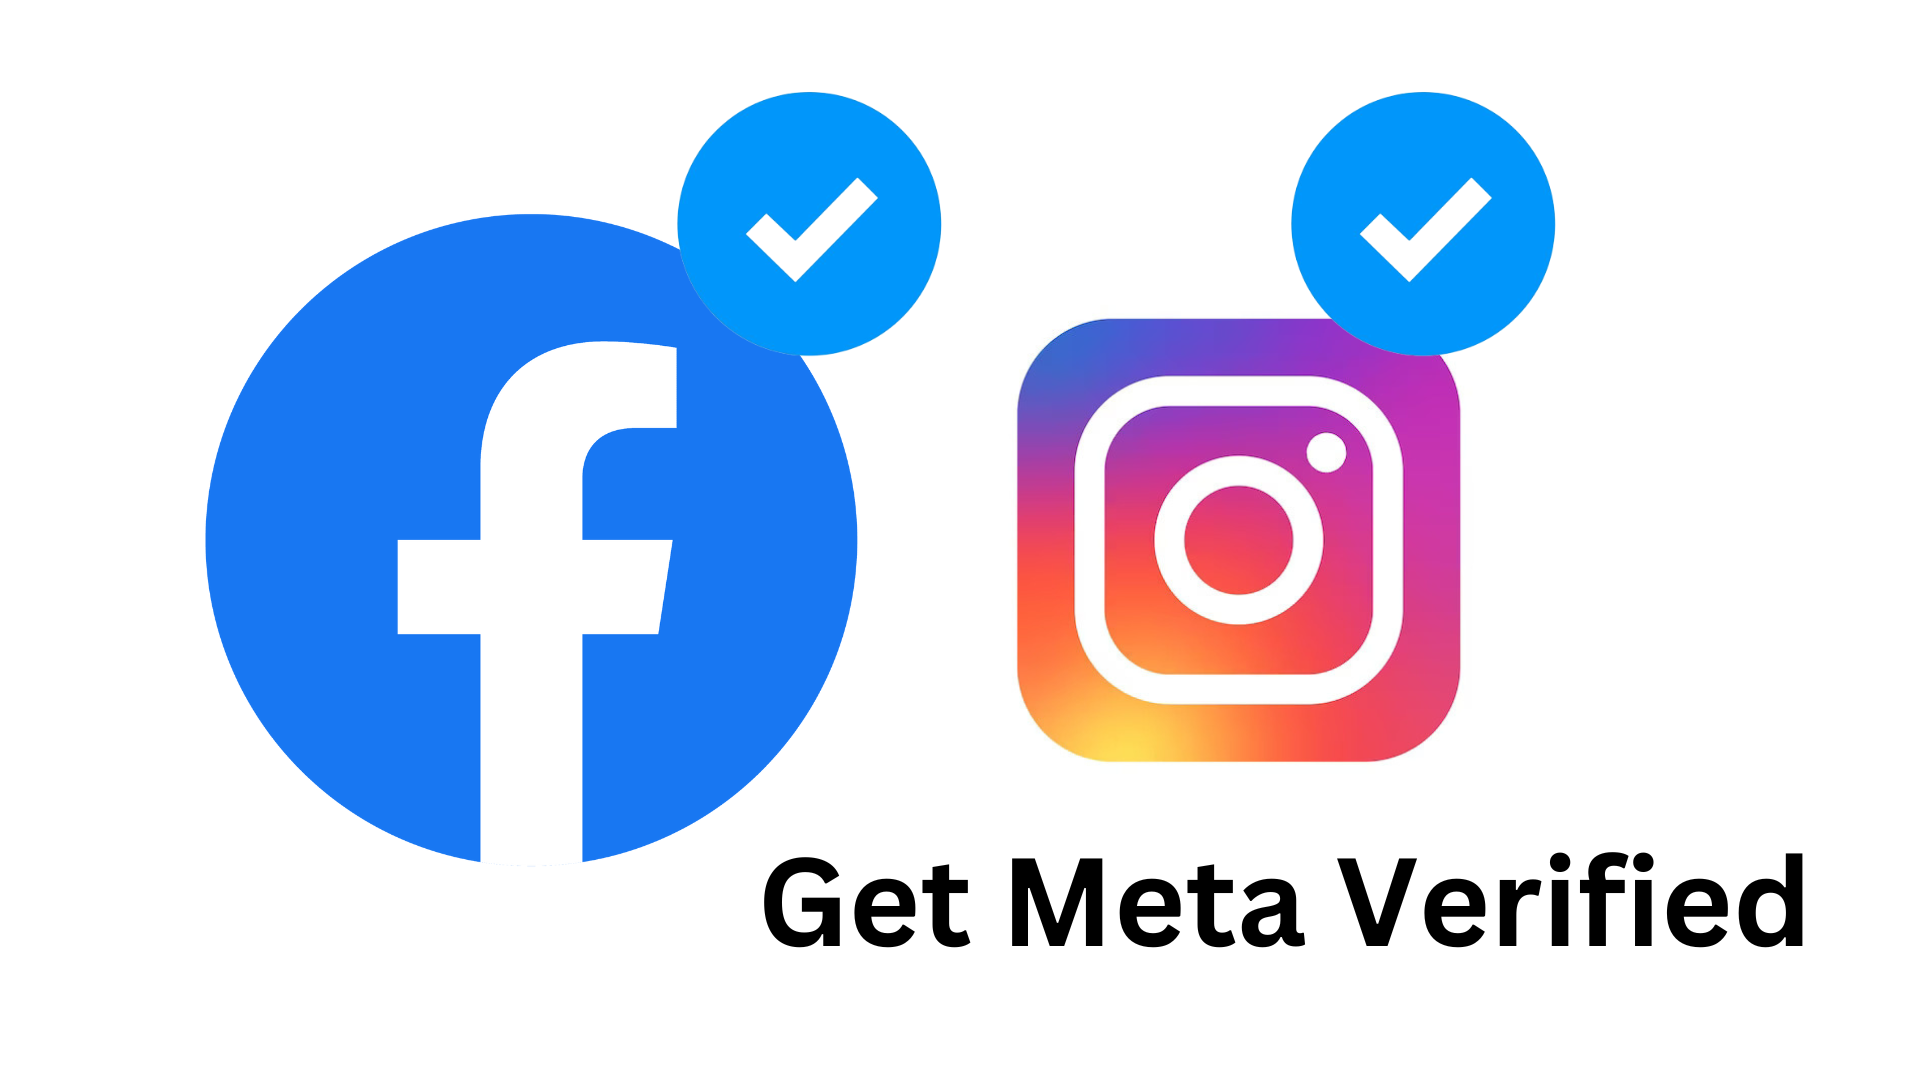 Get Meta Verified